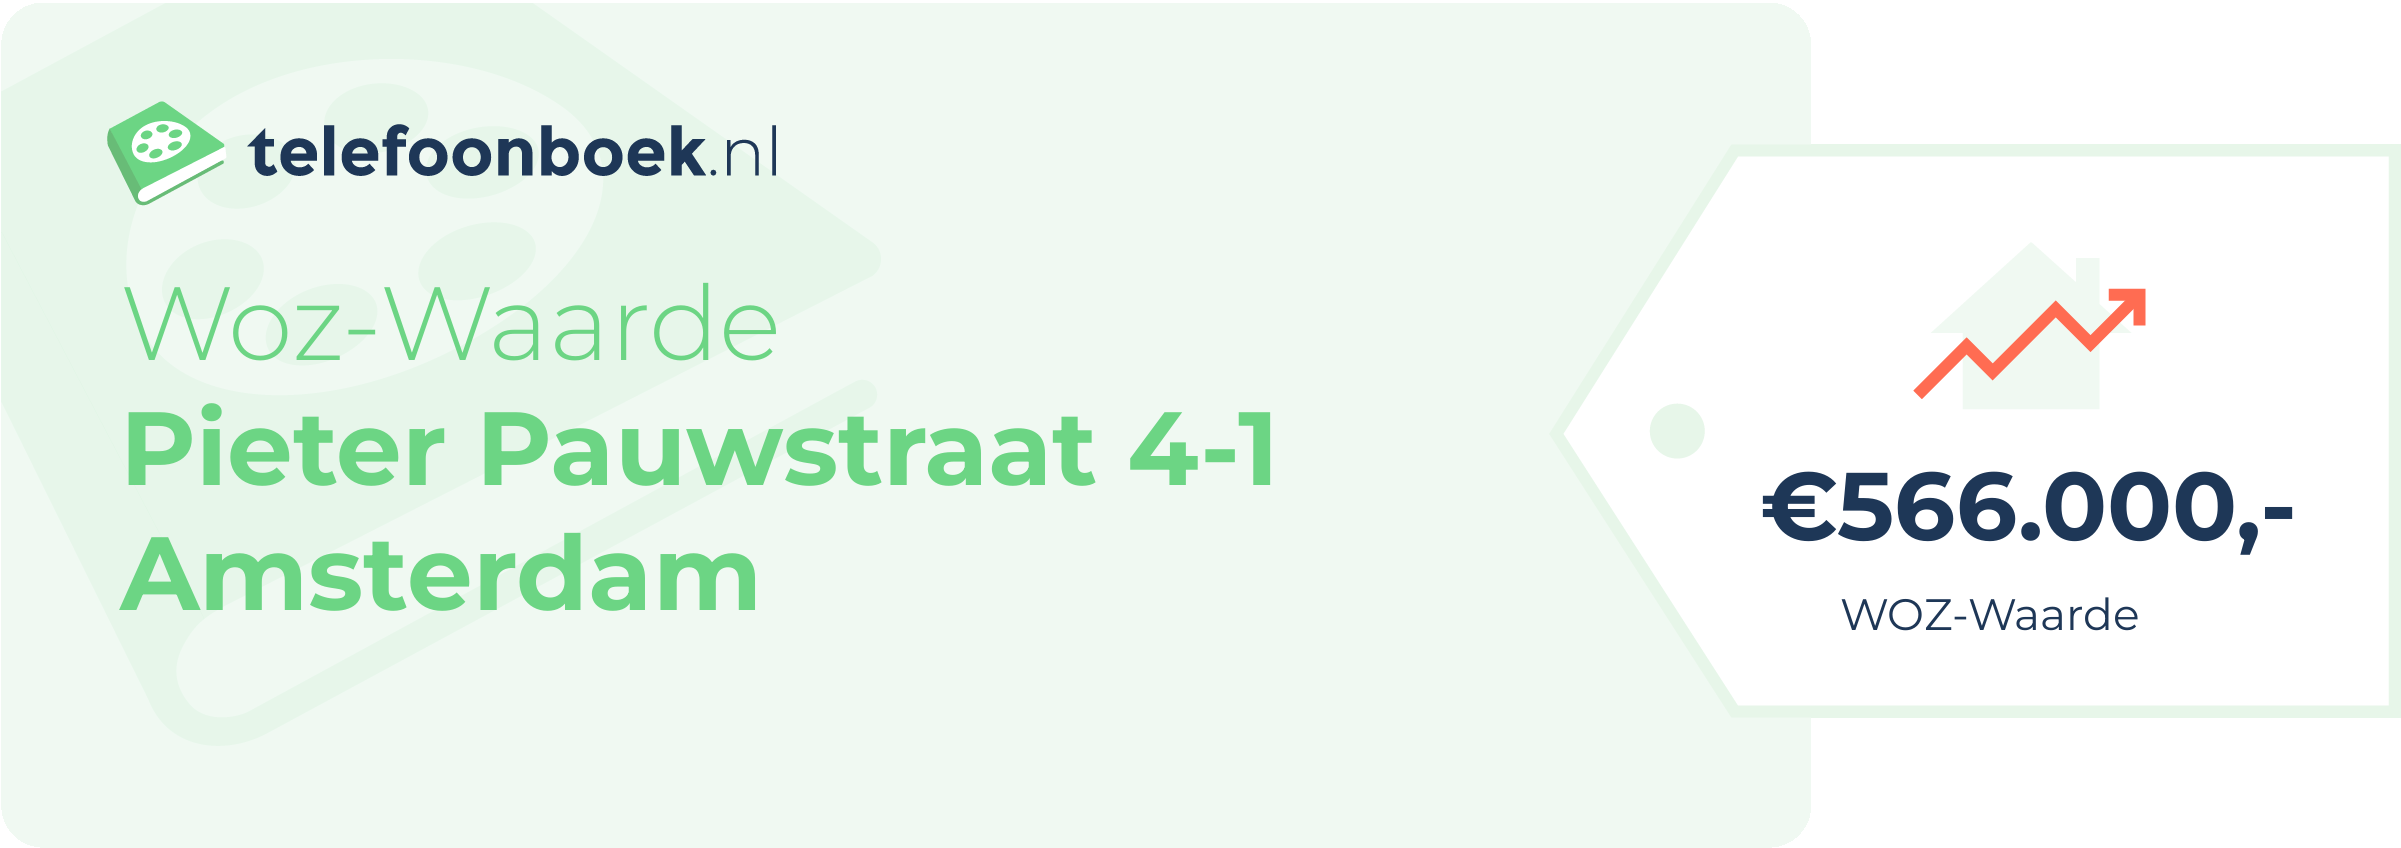 WOZ-waarde Pieter Pauwstraat 4-1 Amsterdam